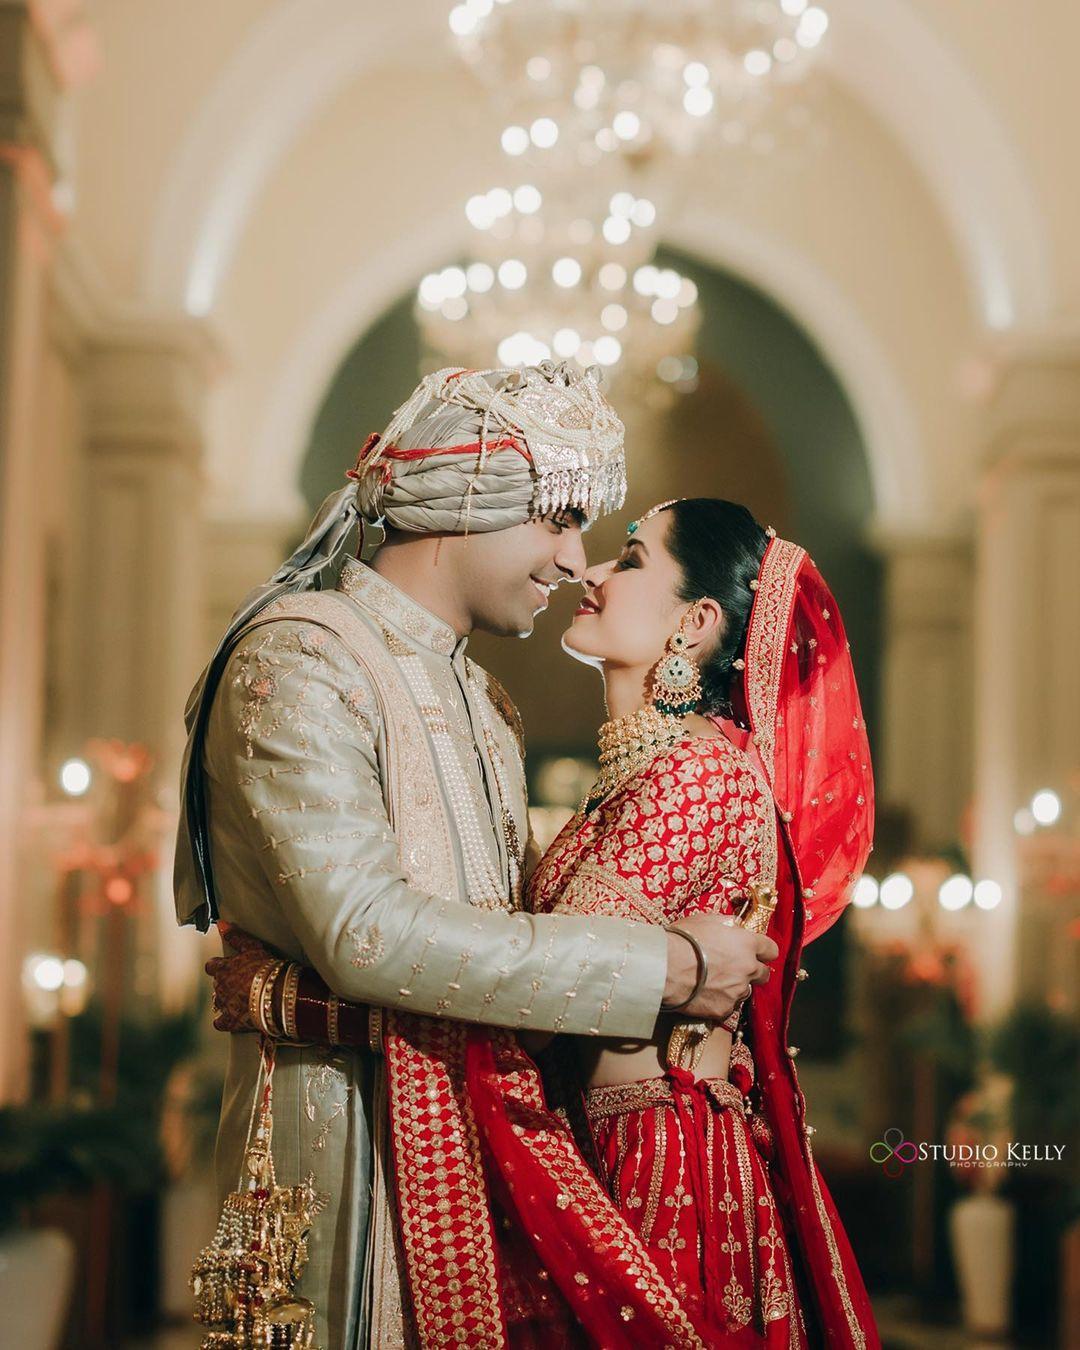 Pin by Suraj Kumar Mishra on photography | Couple wedding dress, Indian bride  poses, Bride photos poses